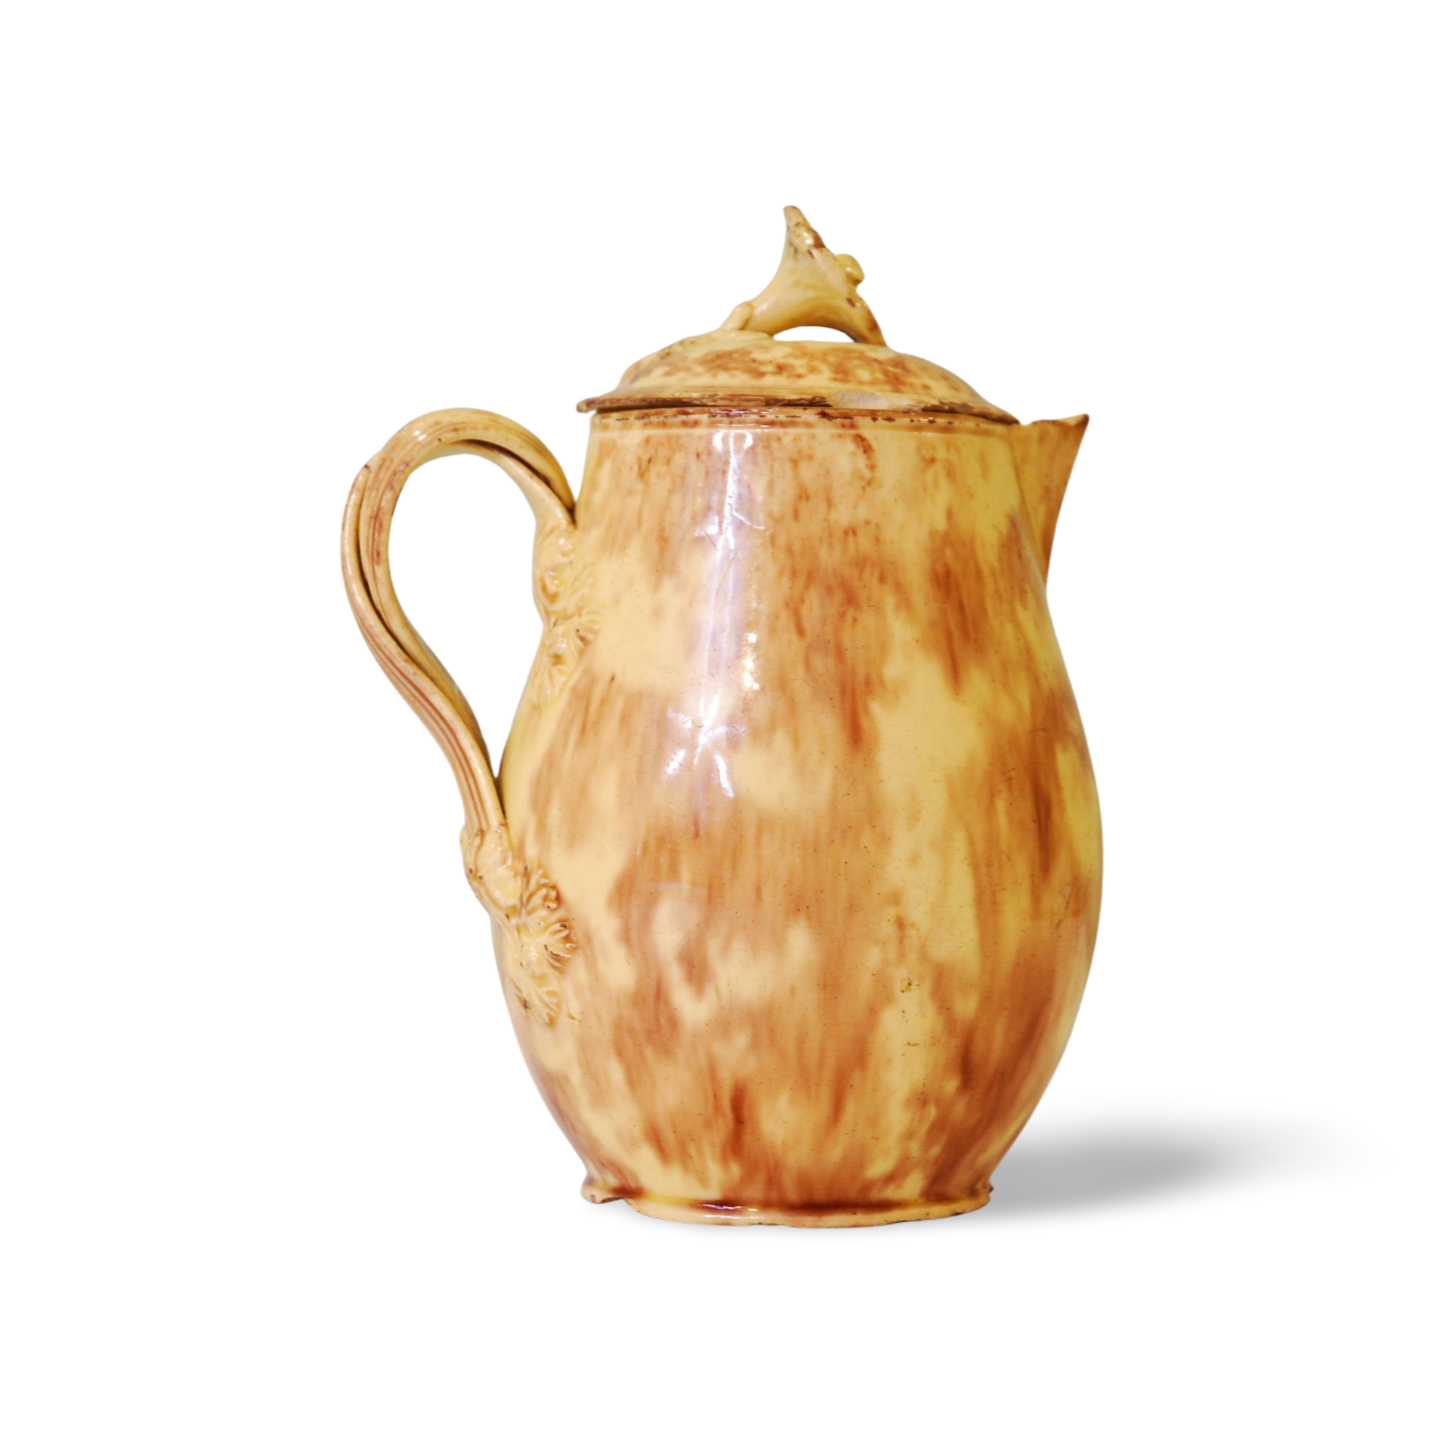 Whieldonware type lidded jug